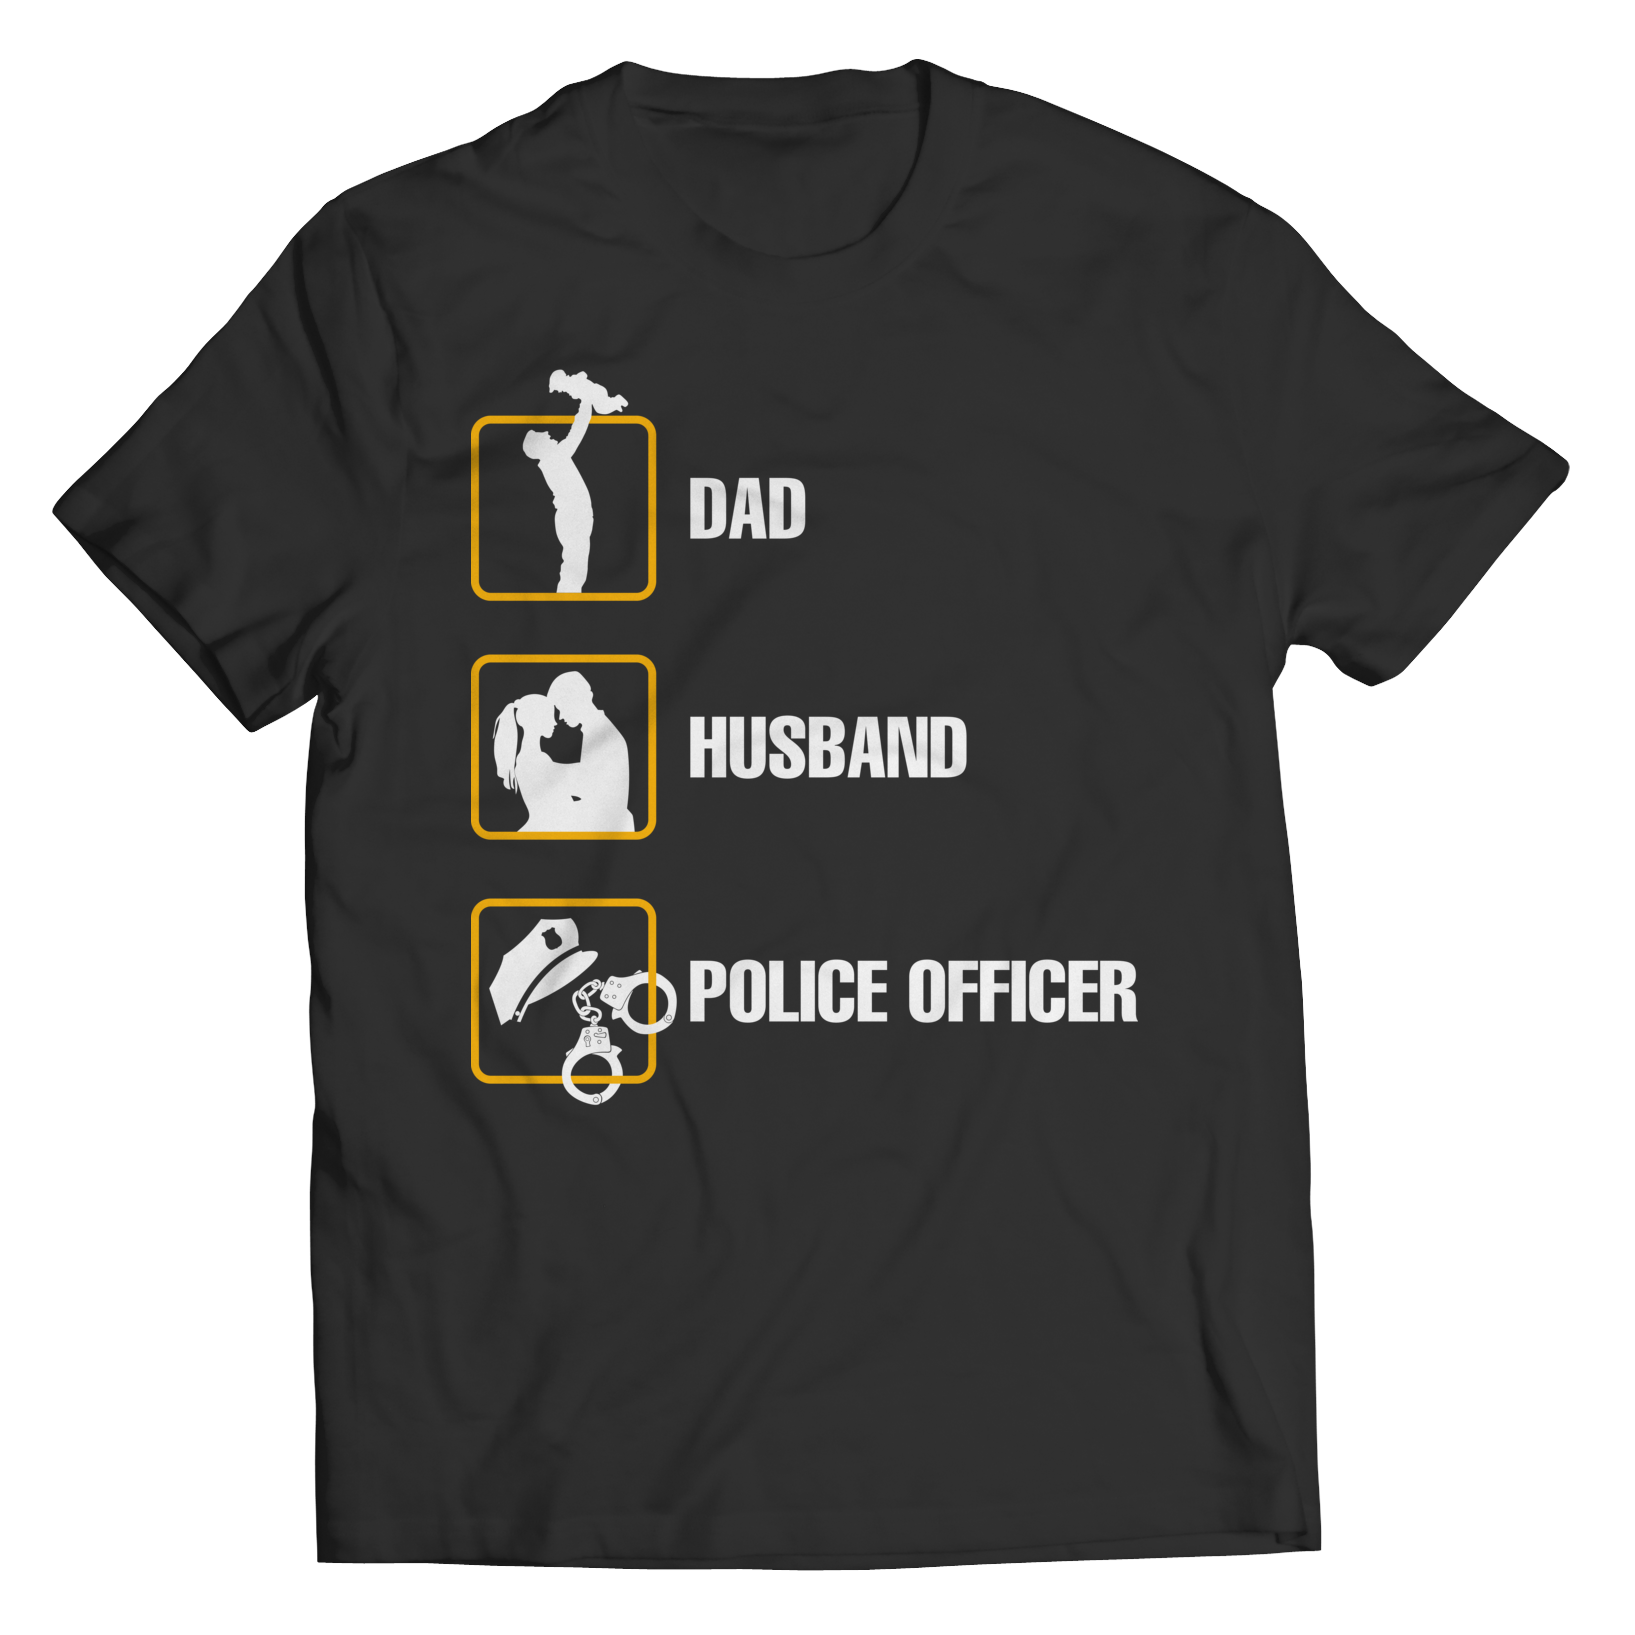 Dad Husband Police Officer Tee Shirt